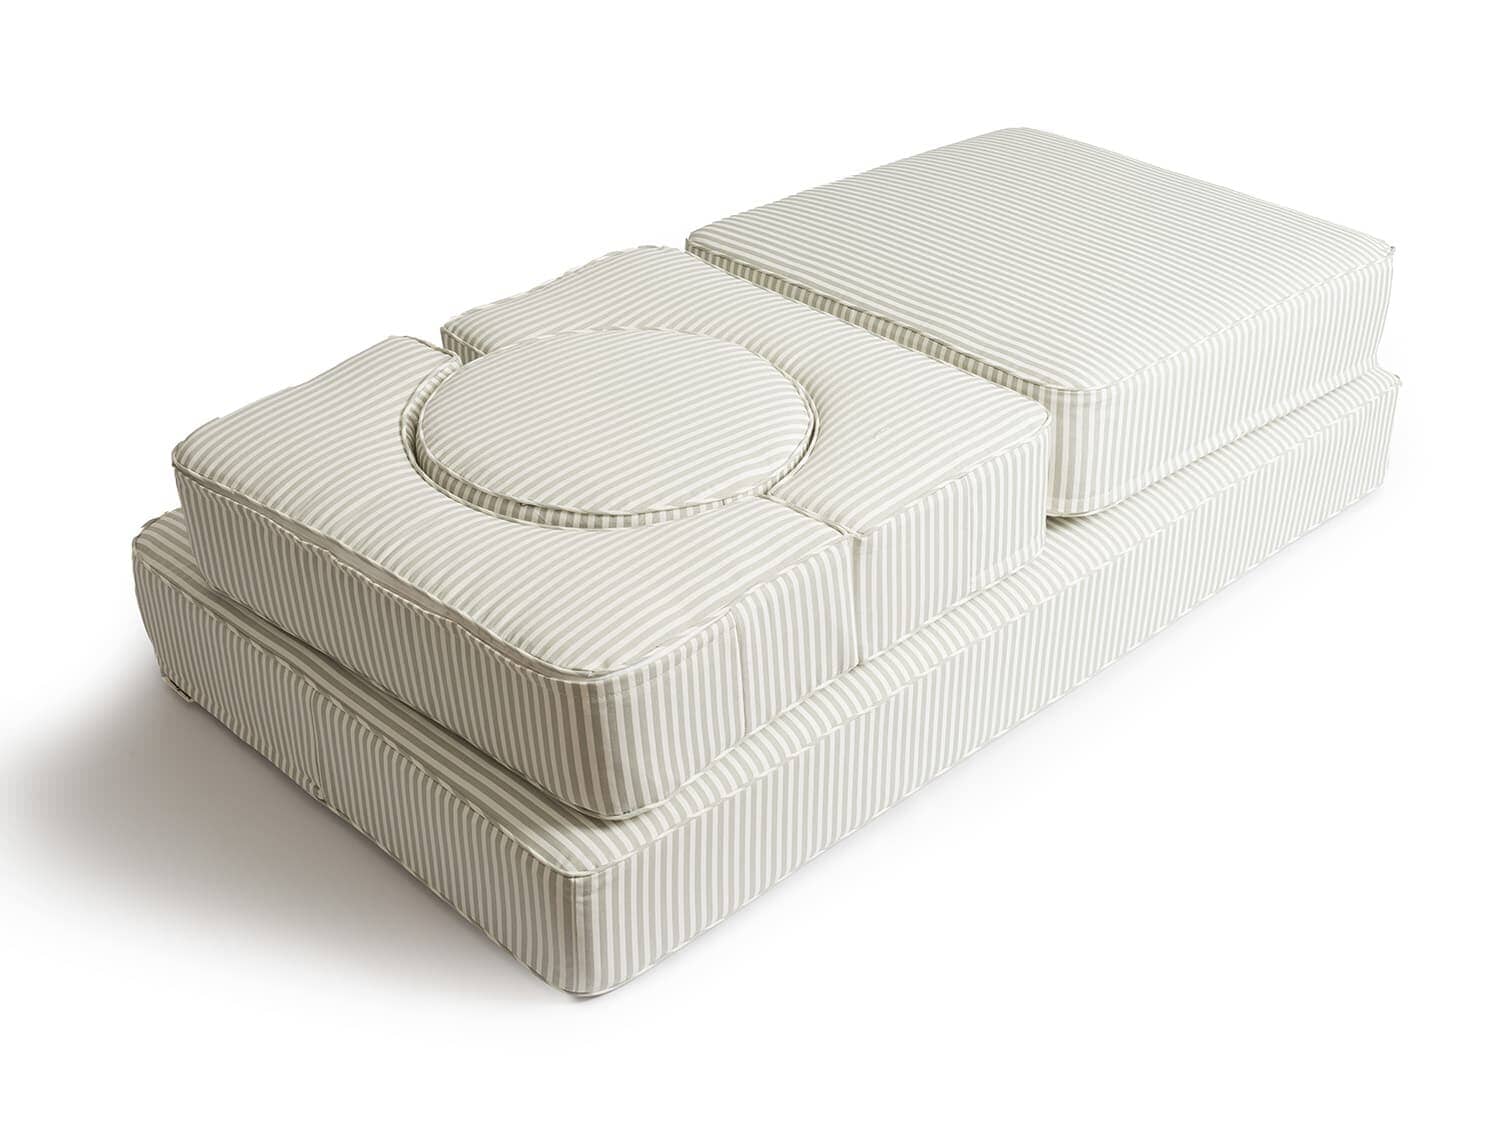 The Modular Pillow Stack - Lauren's Sage Stripe Modular Pillow Stack Business & Pleasure Co Aus 